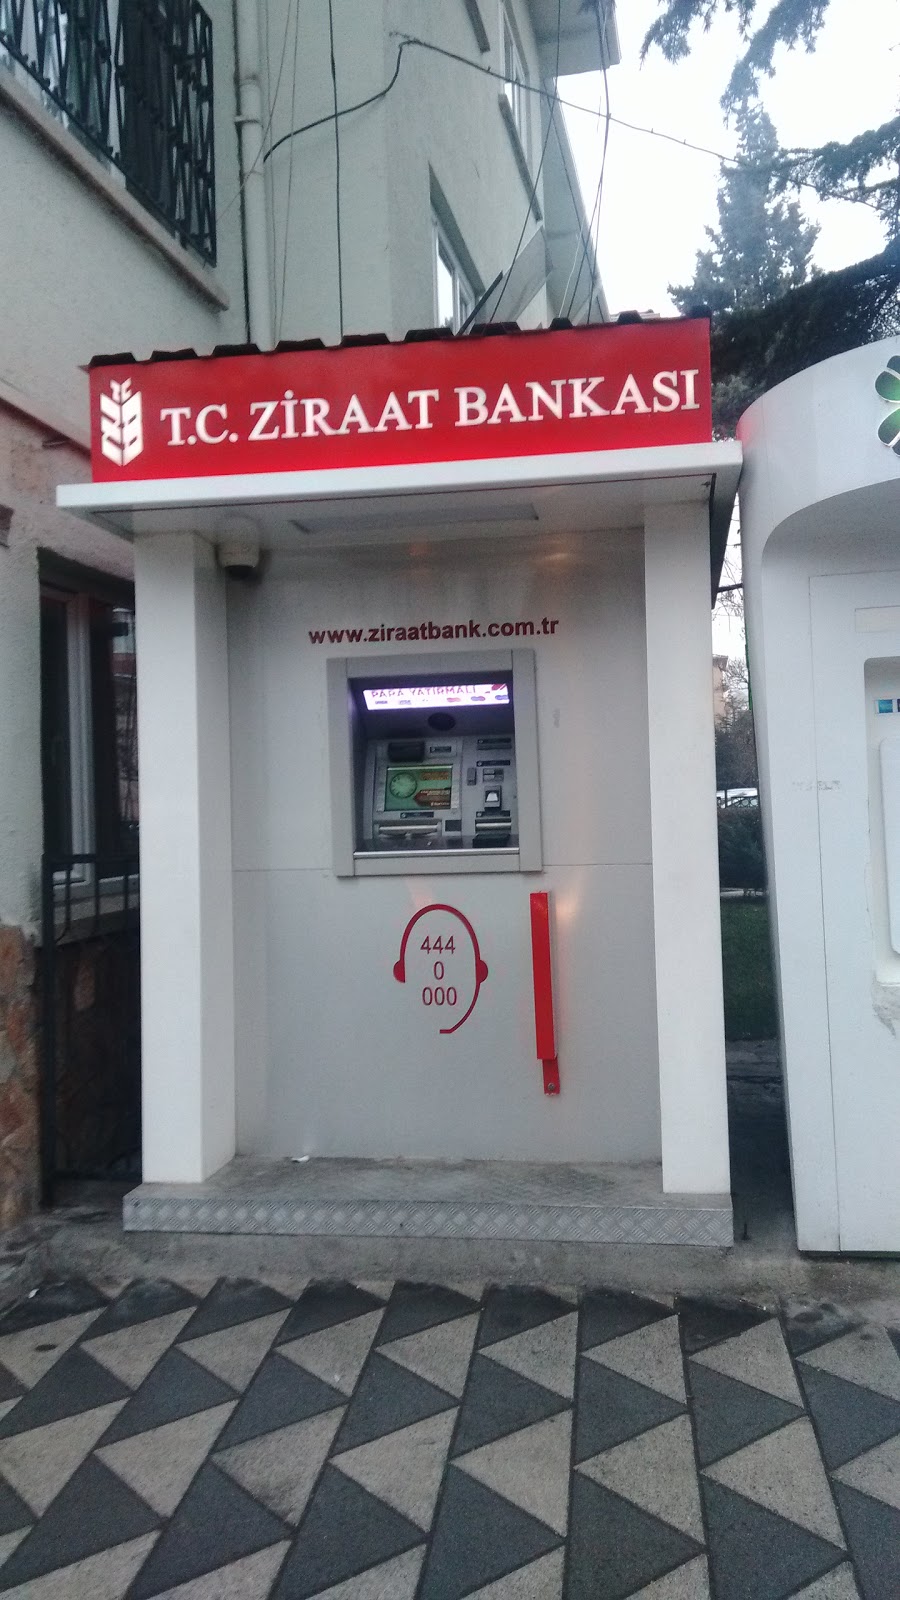 Ziraat Bankası Atm 0